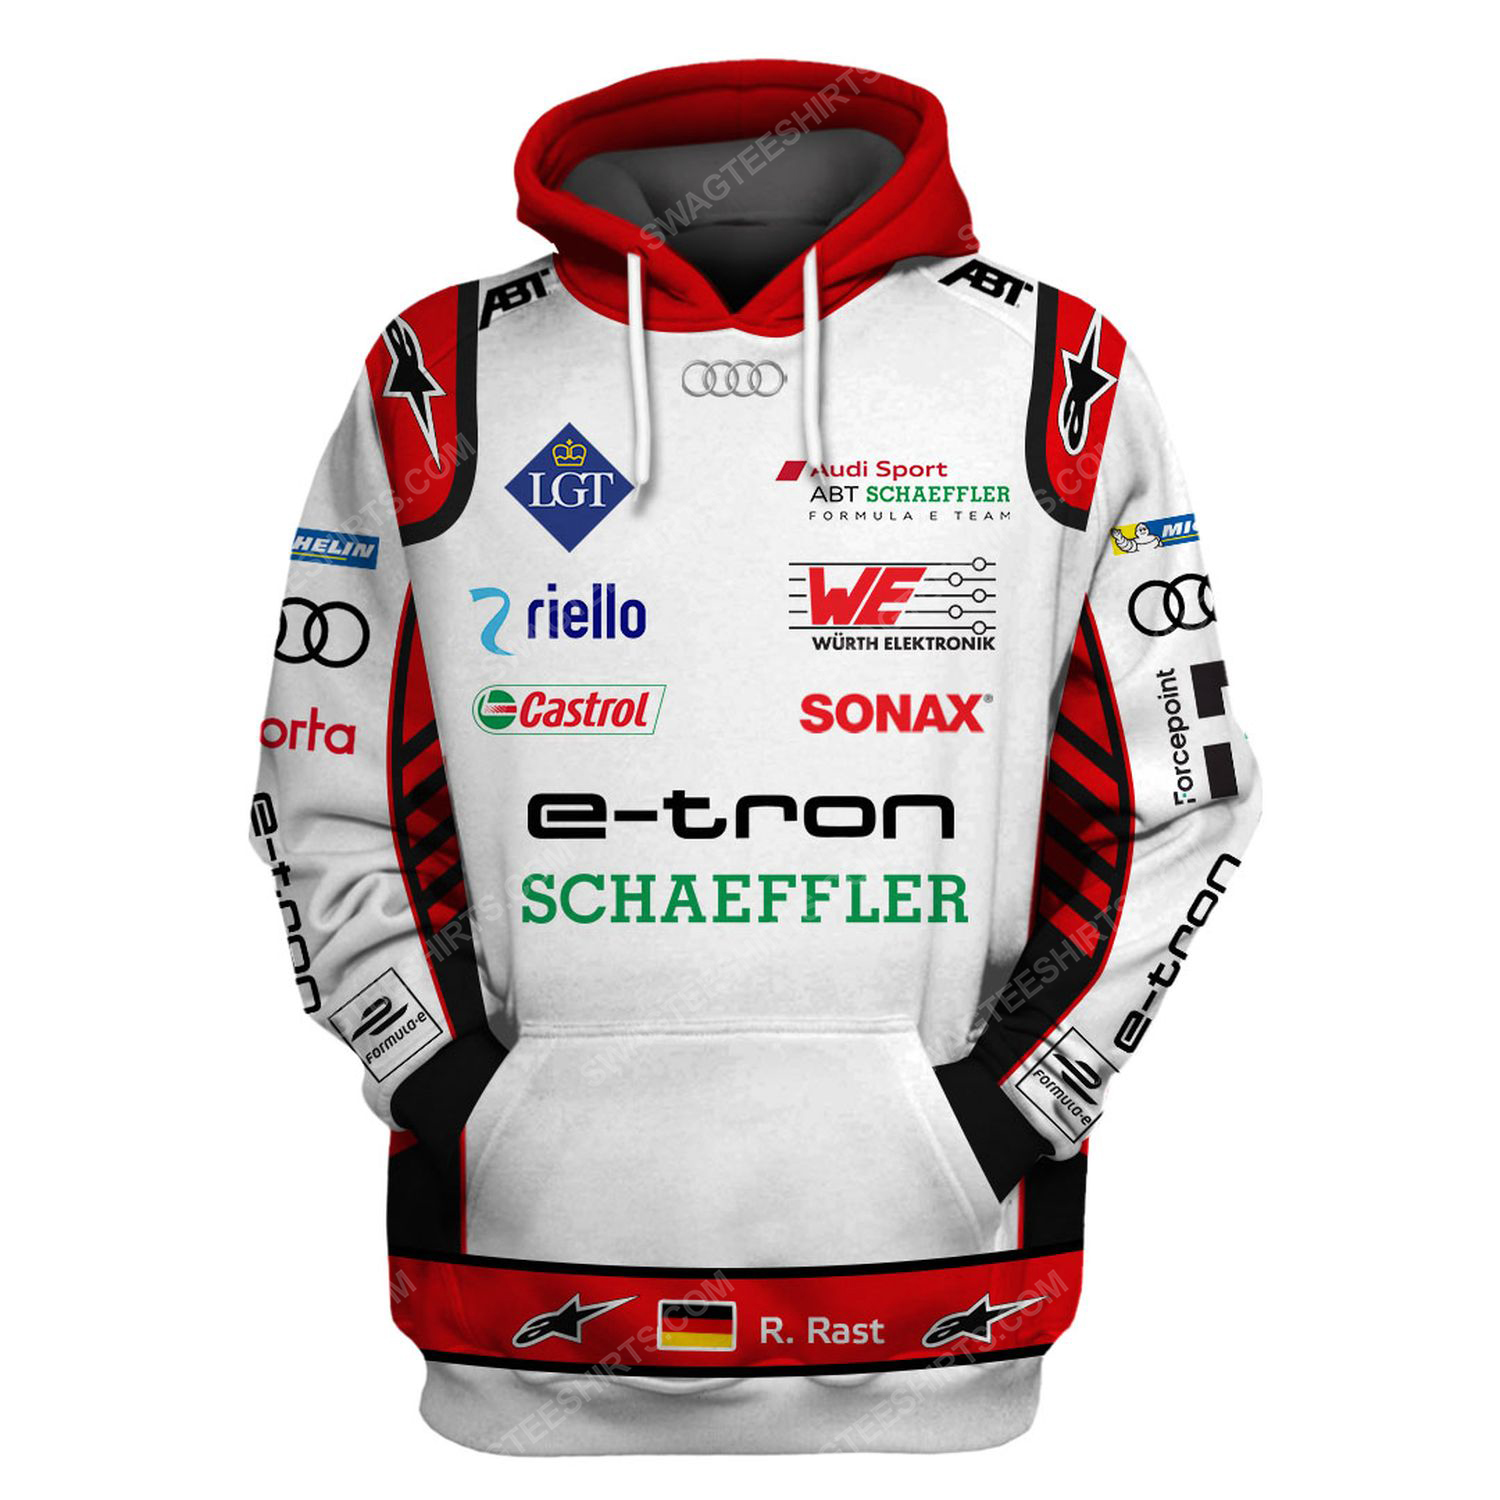 Audi e-tron schwarzer racing team motorsport full printing hoodie